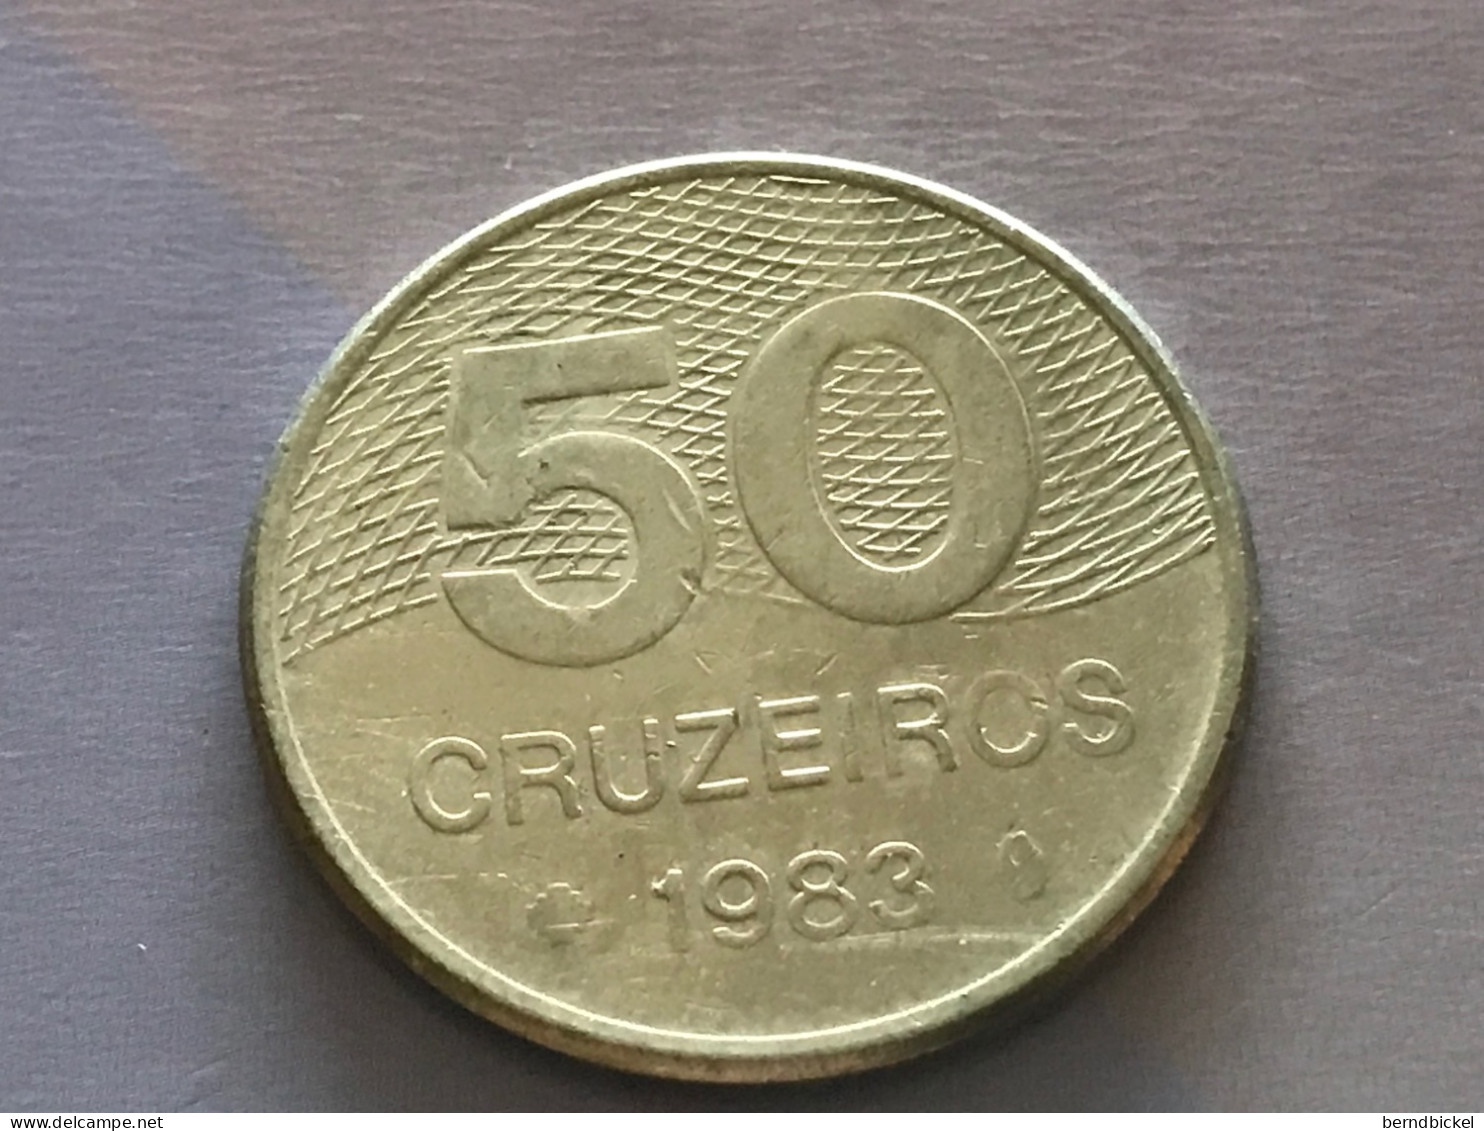 Münze Münzen Umlaufmünze Brasilien 50 Cruzeiros 1983 - Brésil